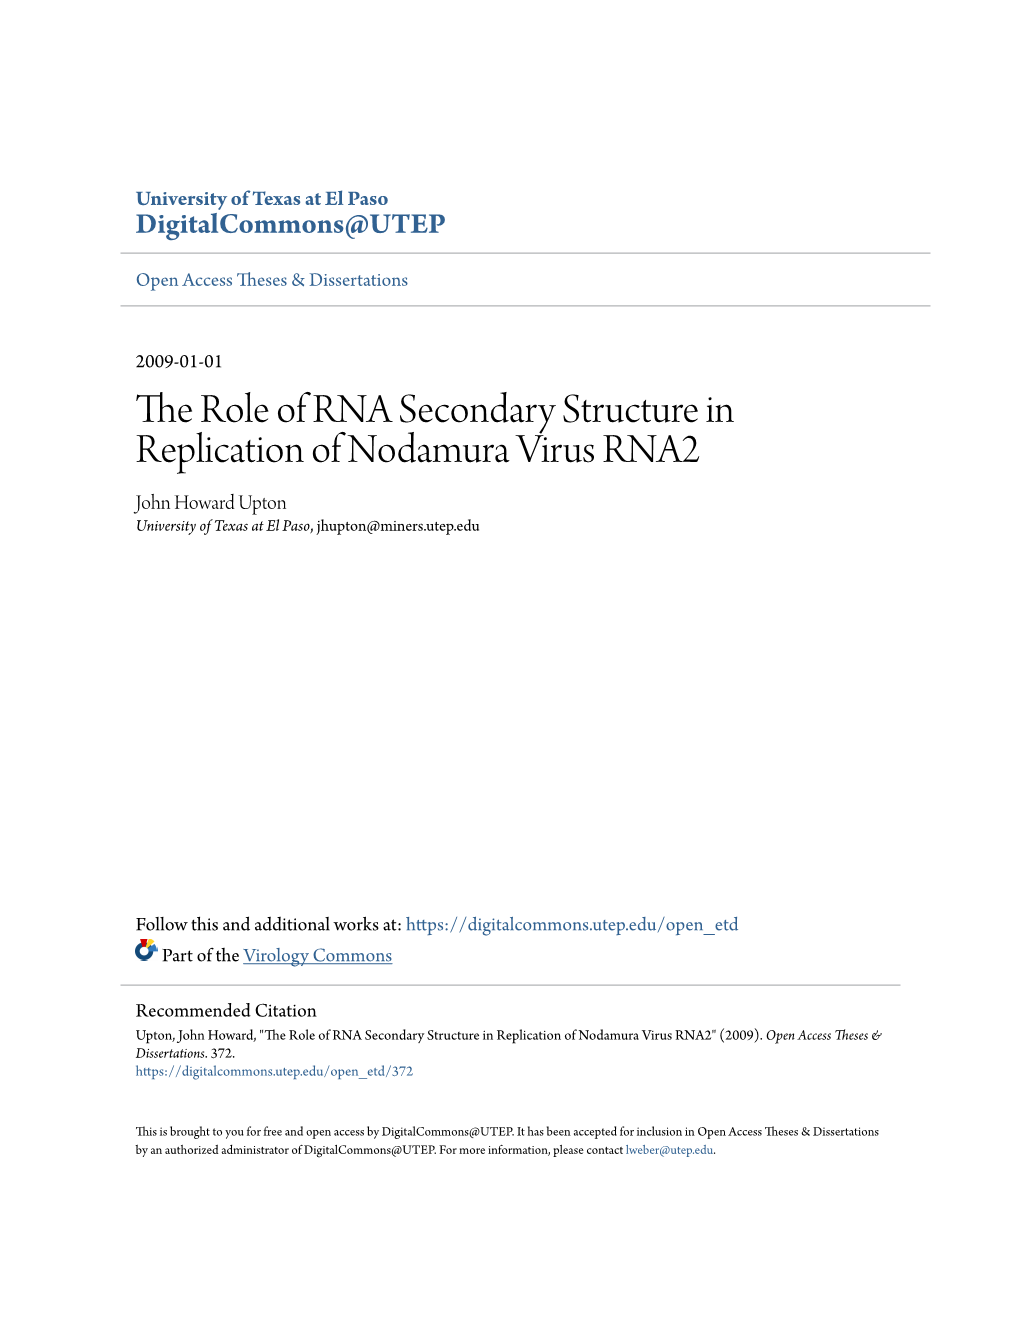 The Role of RNA Secondary Structure in Replication of Nodamura Virus RNA2 John Howard Upton University of Texas at El Paso, Jhupton@Miners.Utep.Edu